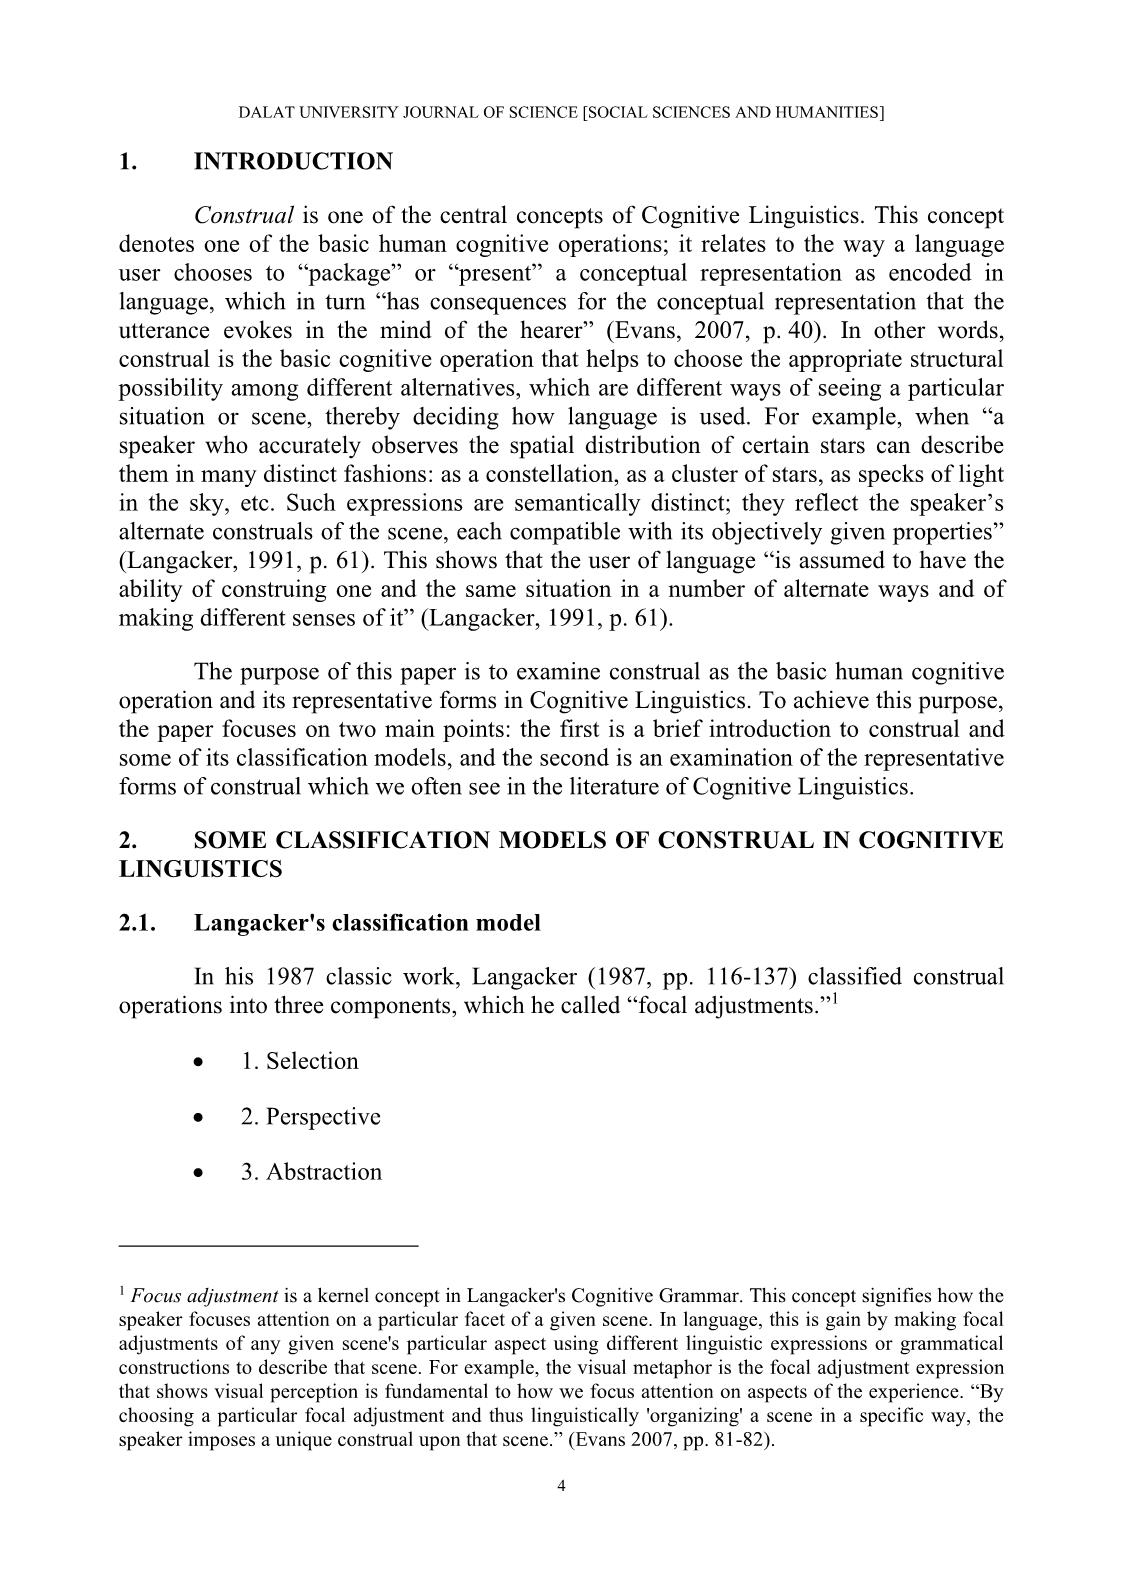 Construal and its representative forms in cognitive linguistics trang 2